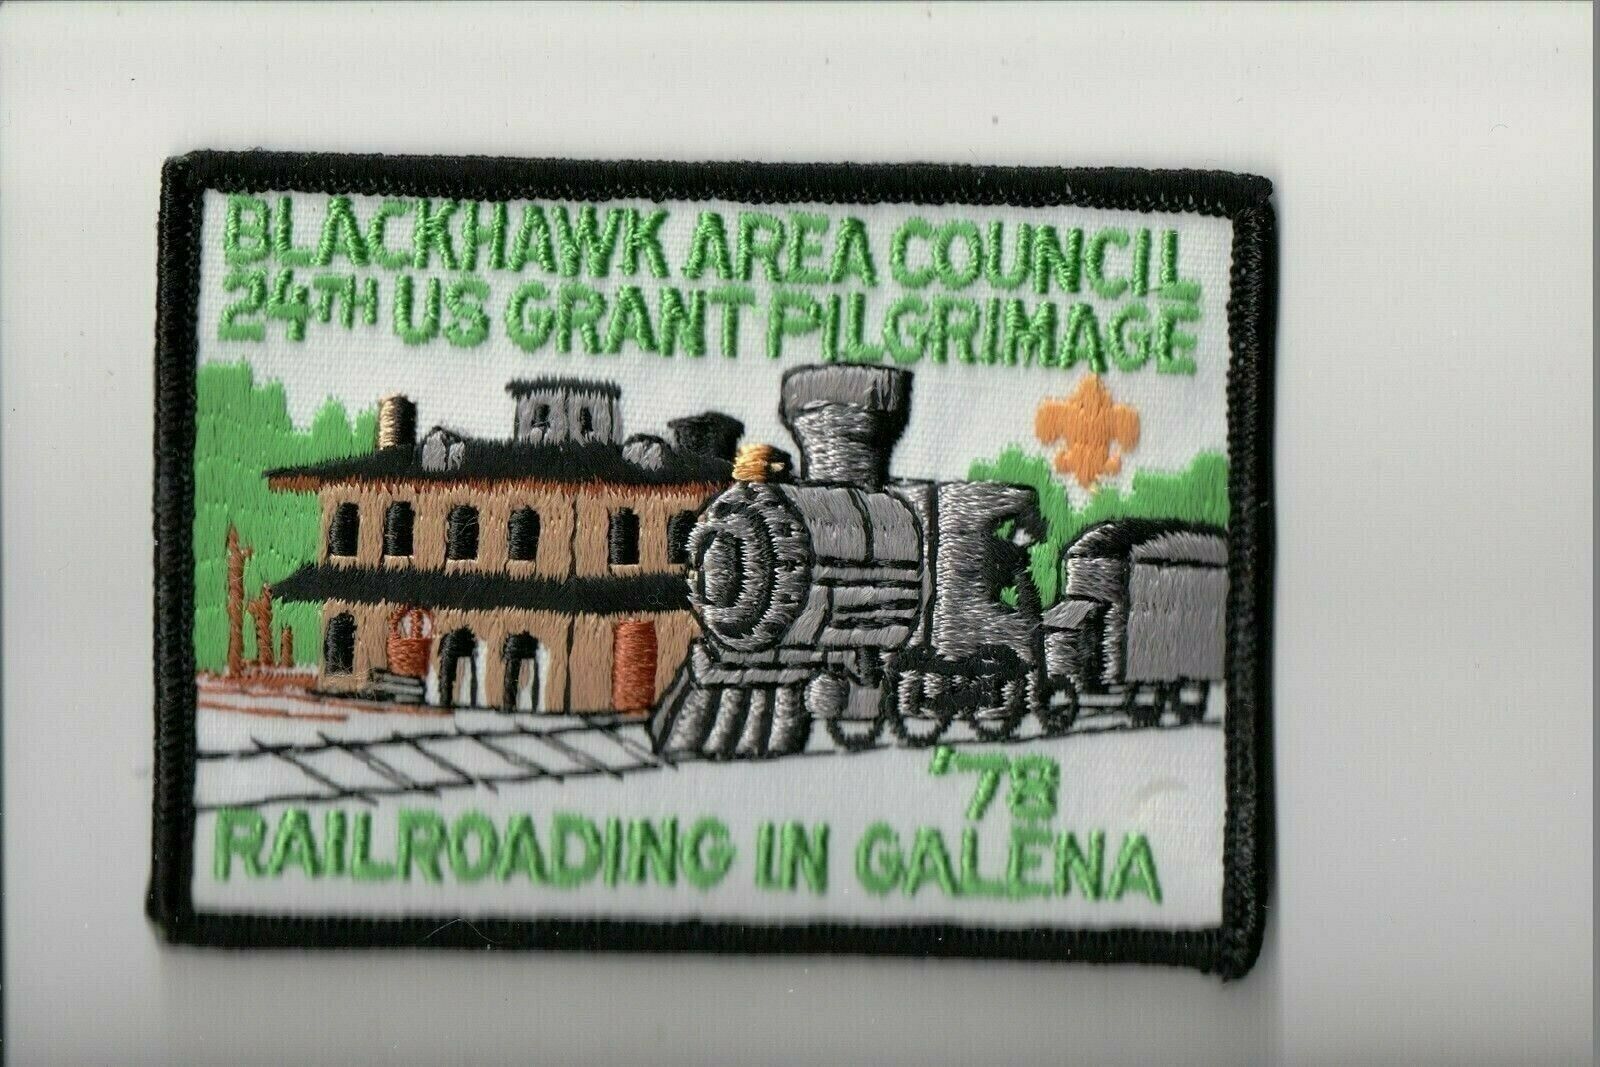 1978 Blackhawk Area Council 24th US Grant Pilgrimage Railroading In Galena patch